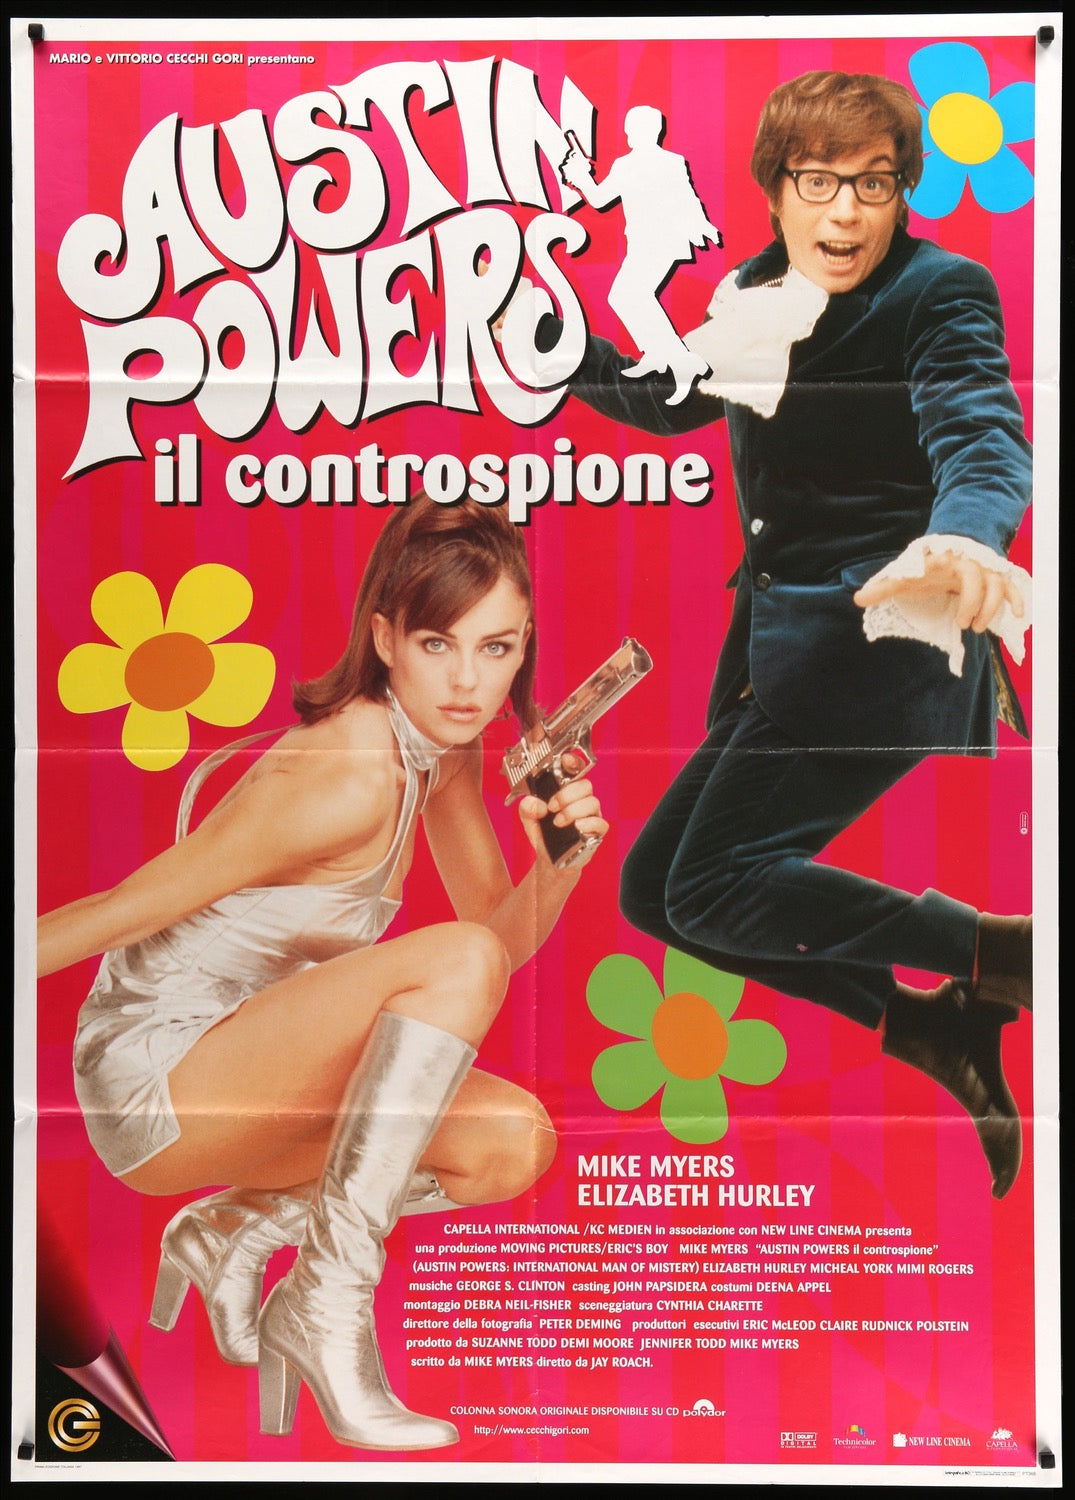 Austin Powers: International Man of Mystery (1997) original movie poster for sale at Original Film Art